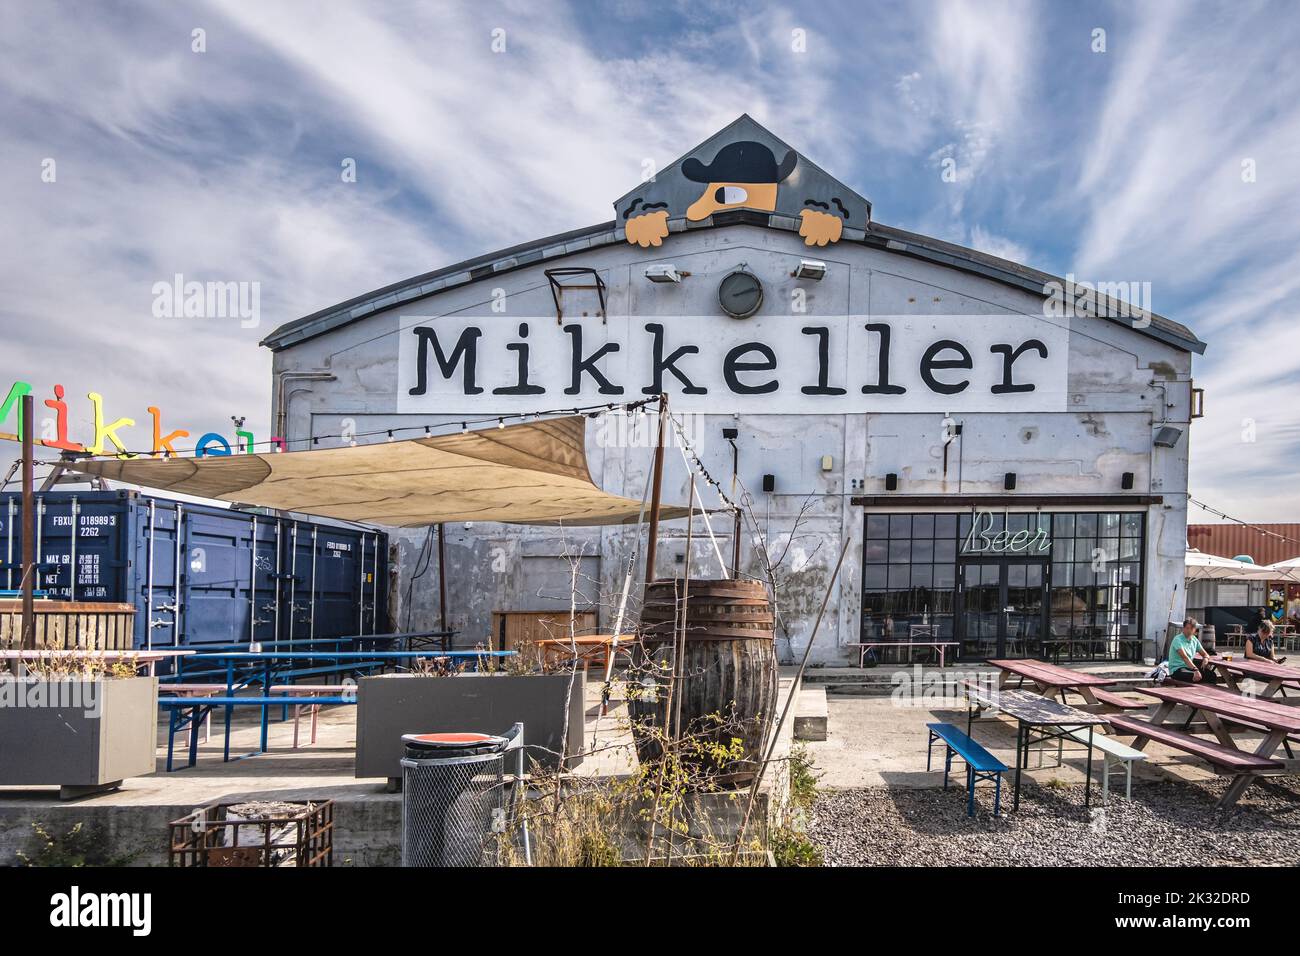 Mikkeller original brewery in Copanhagen harbor, Denmark Stock Photo